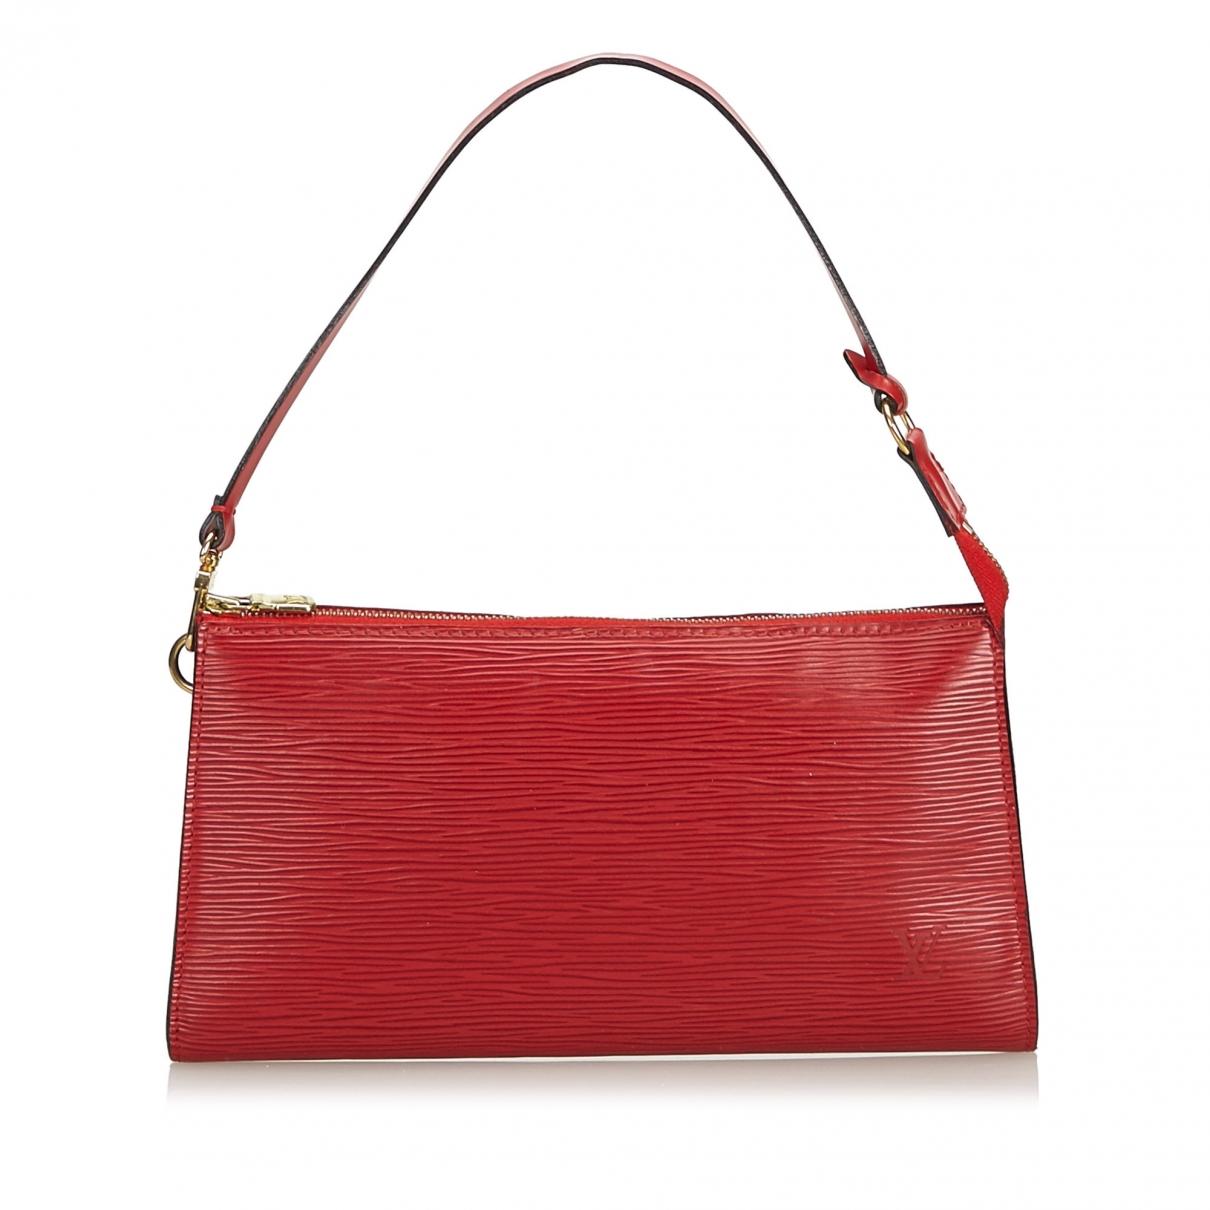 Lyst - Louis Vuitton Pochette Accessoire Leather Clutch Bag in Red